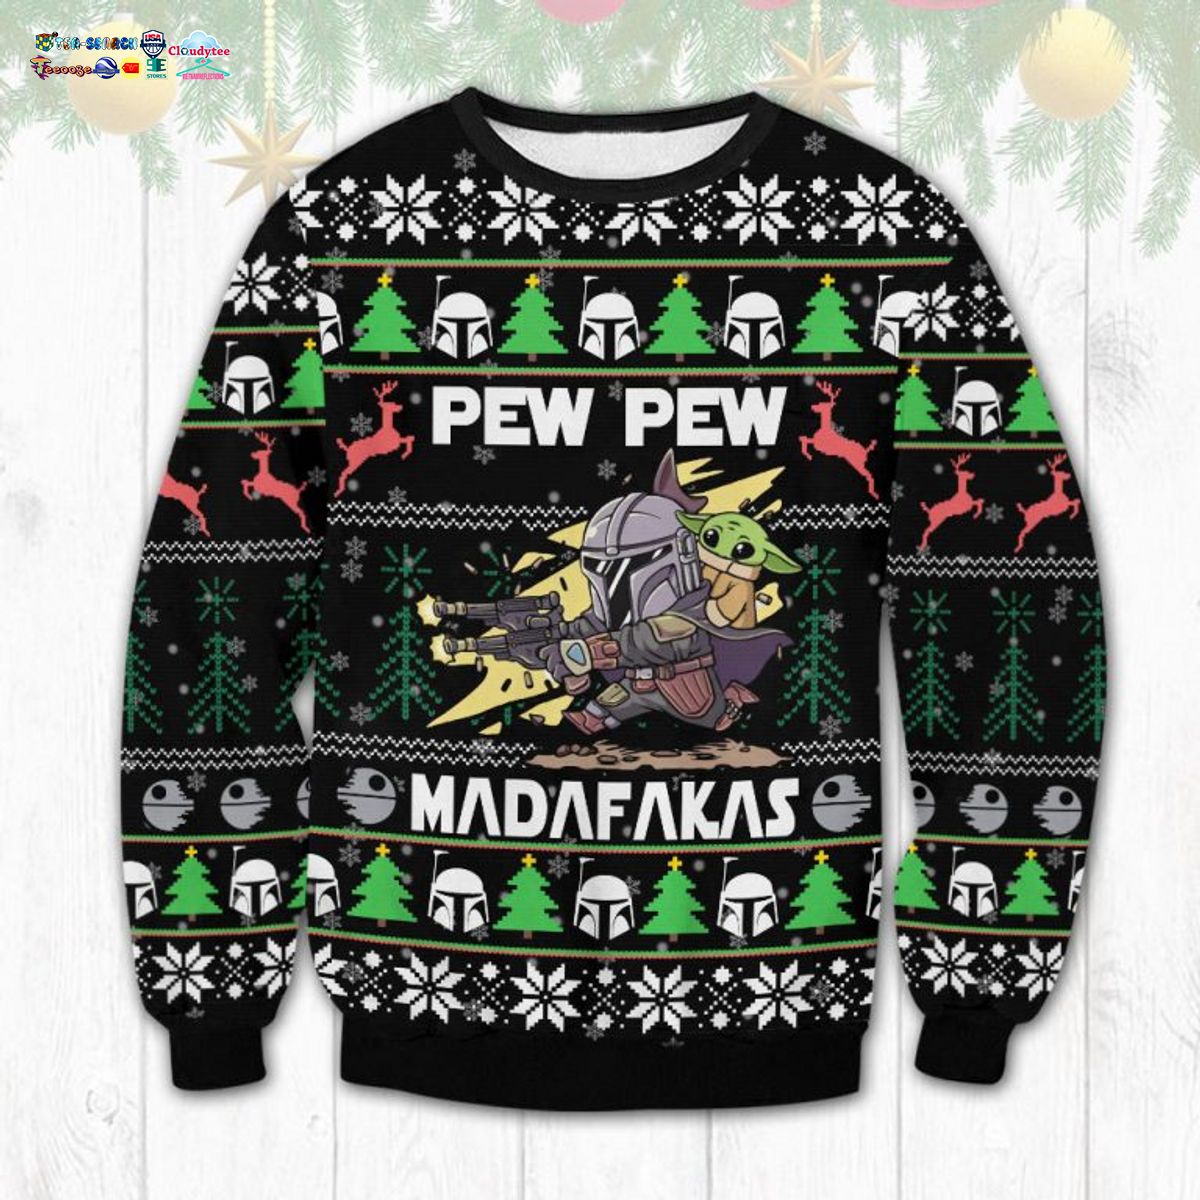 Star Wars Baby Yoda Darth Vader Pew Pew Madafakas Ugly Christmas Sweater